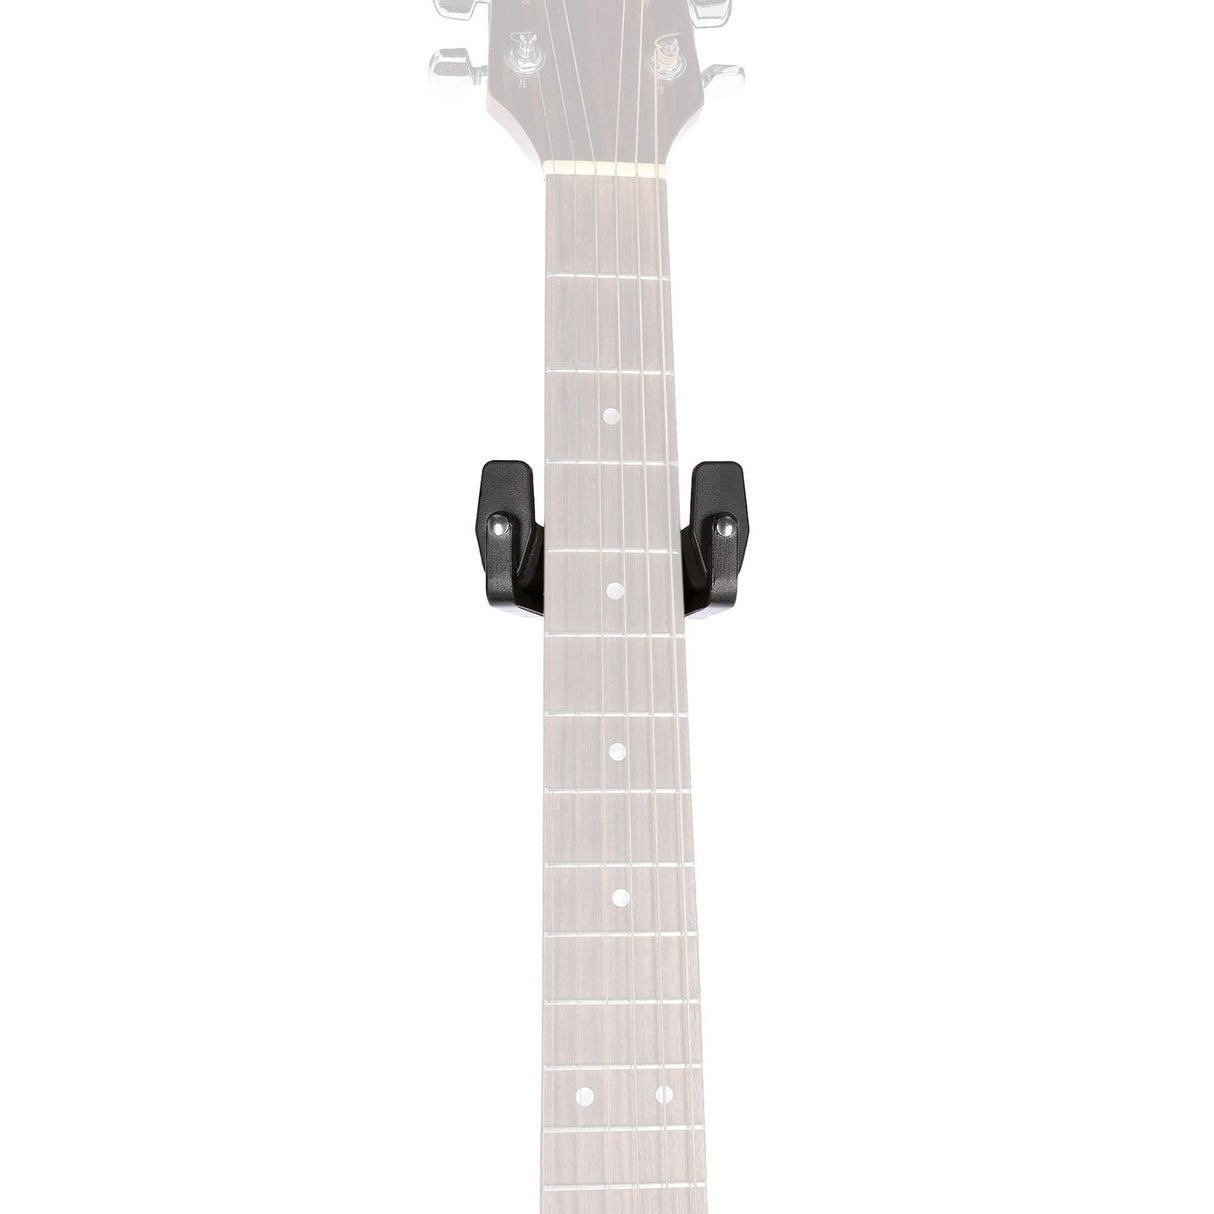 Gravity GS LS 01 NH B Neckhug Guitar GLOW STAND